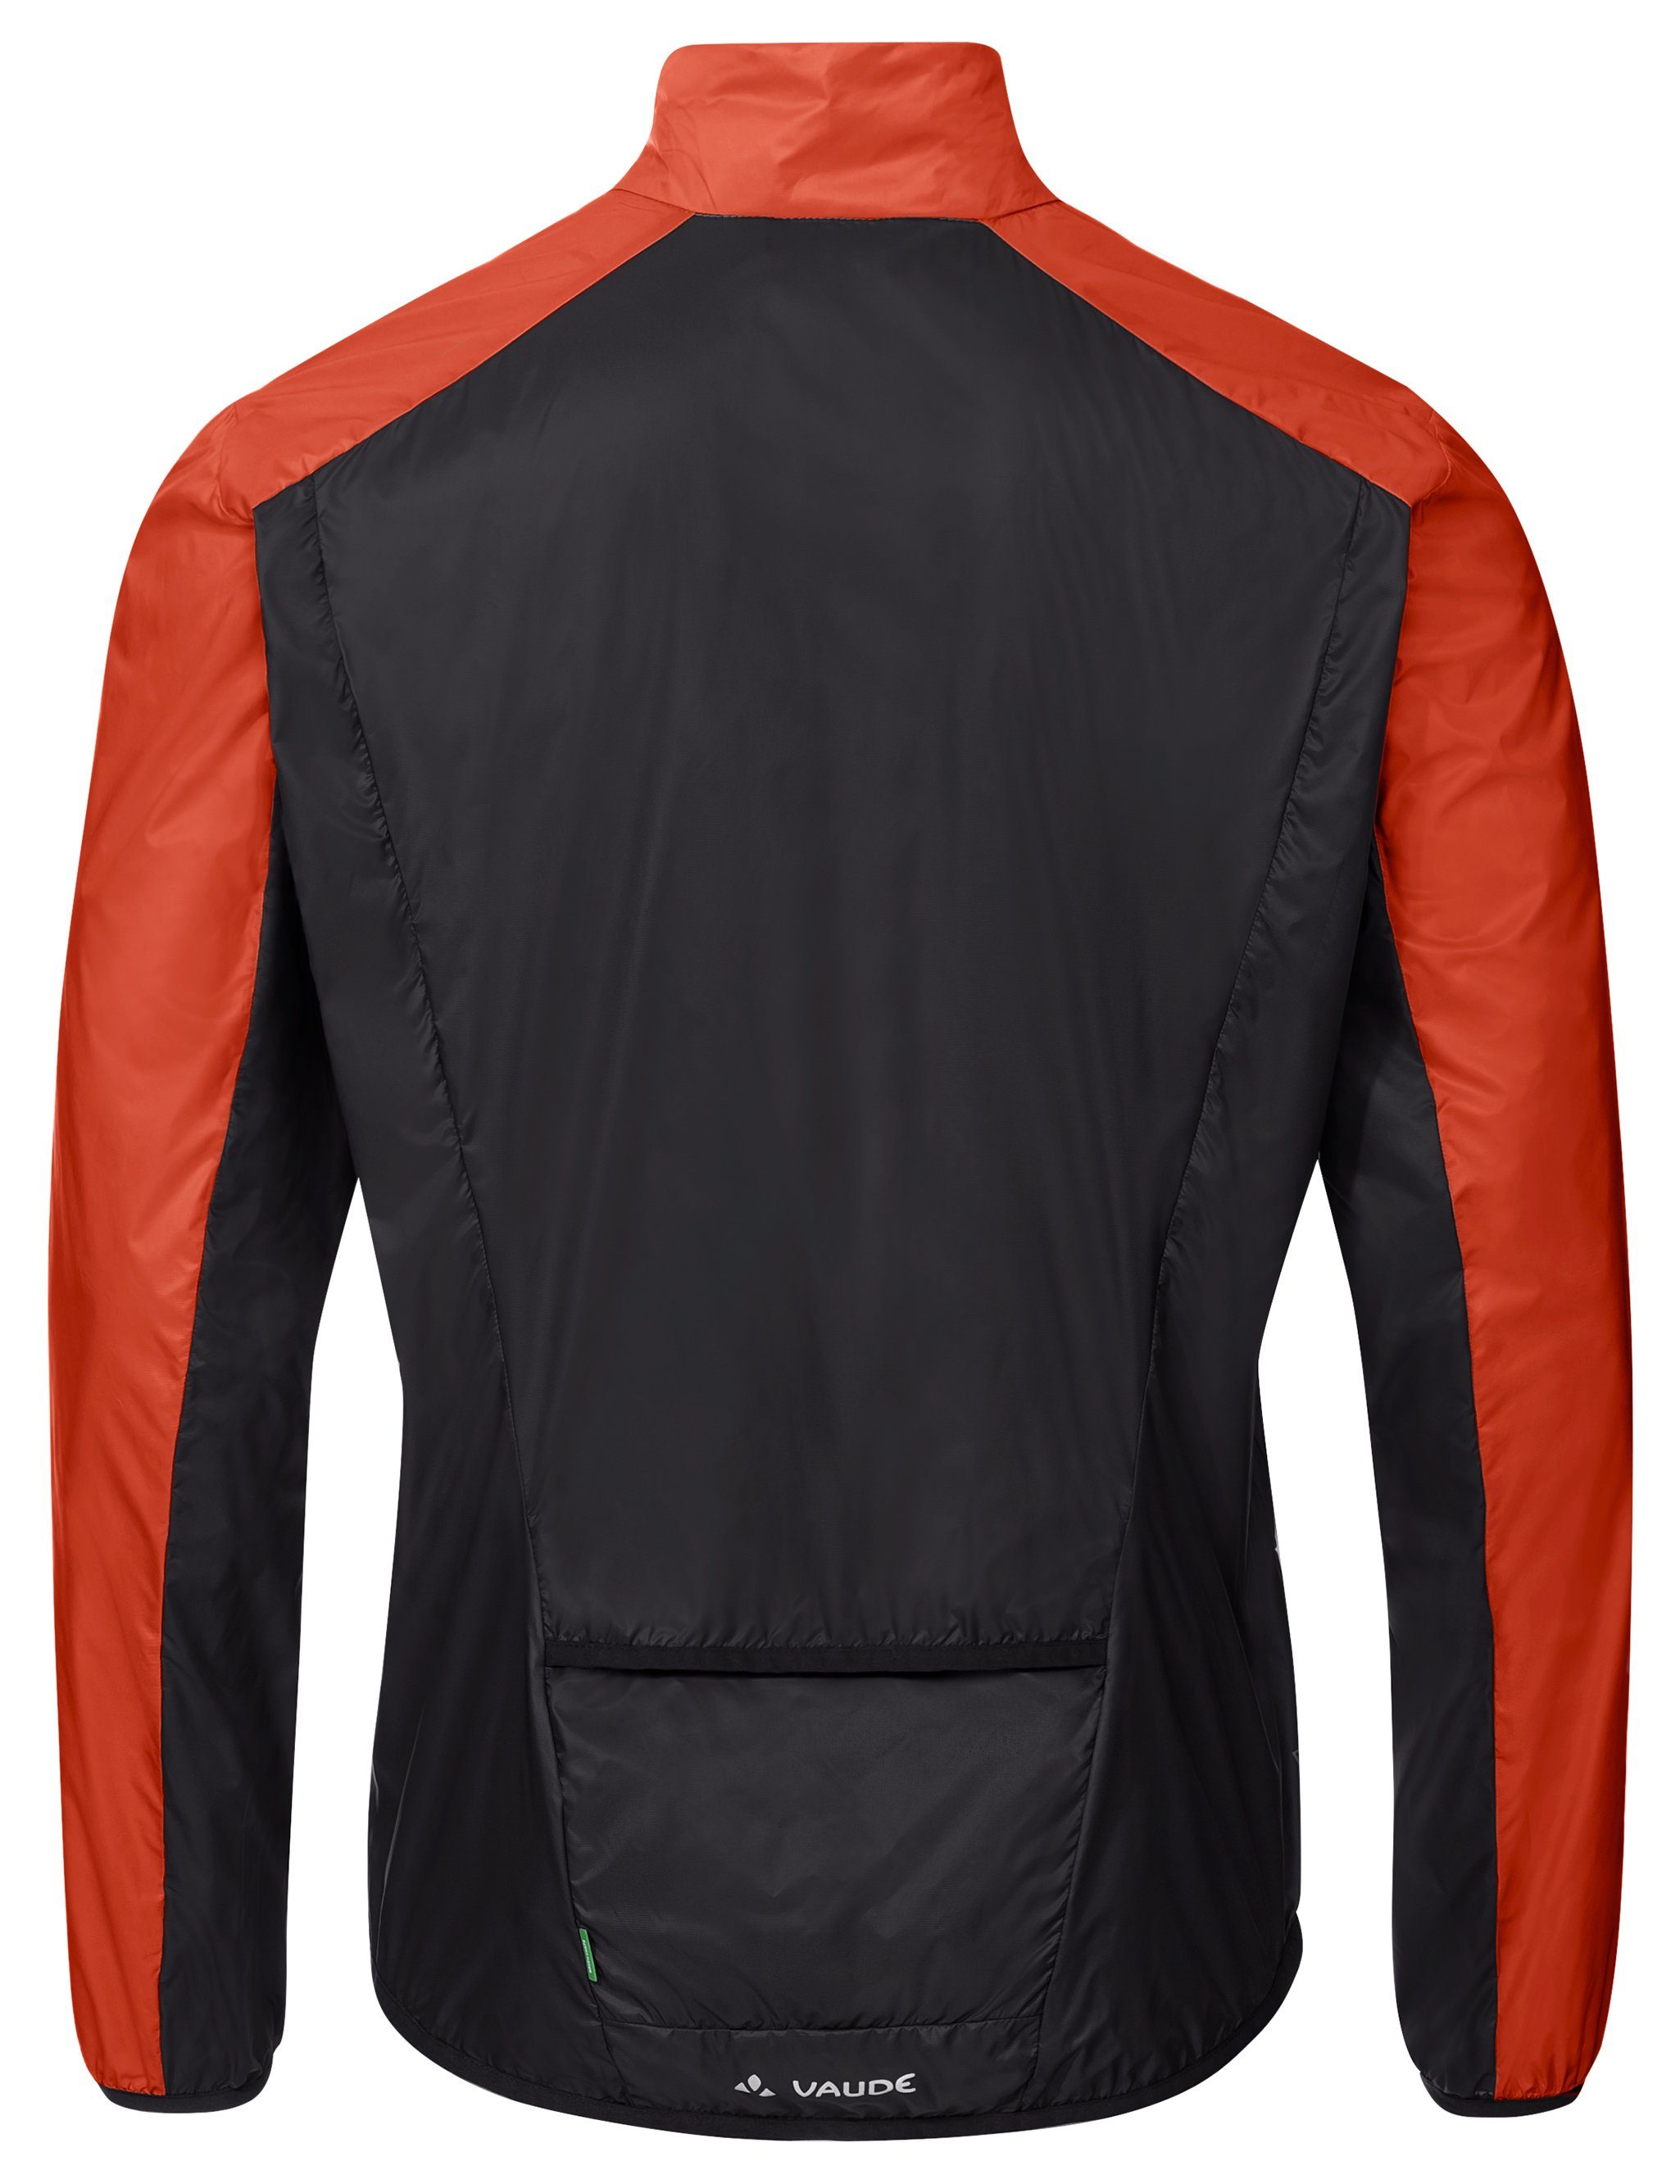 (1-St) Jacket Outdoorjacke red Men's Air VAUDE glowing Matera kompensiert Klimaneutral